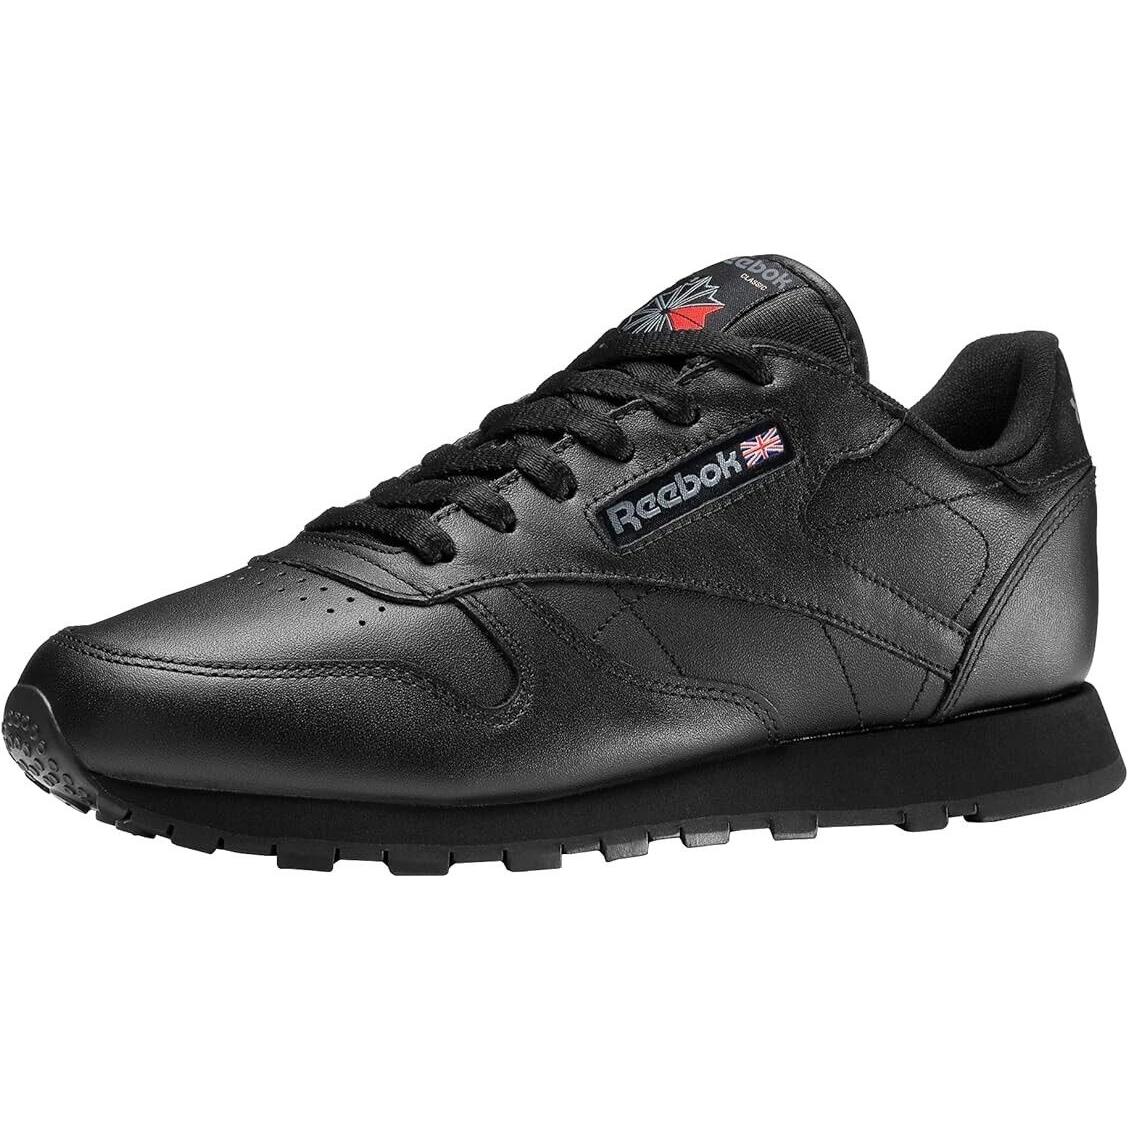 Reebok Classic Leather 50149 Big Kids Black Casual Sneaker Shoes Size 6 RBK104